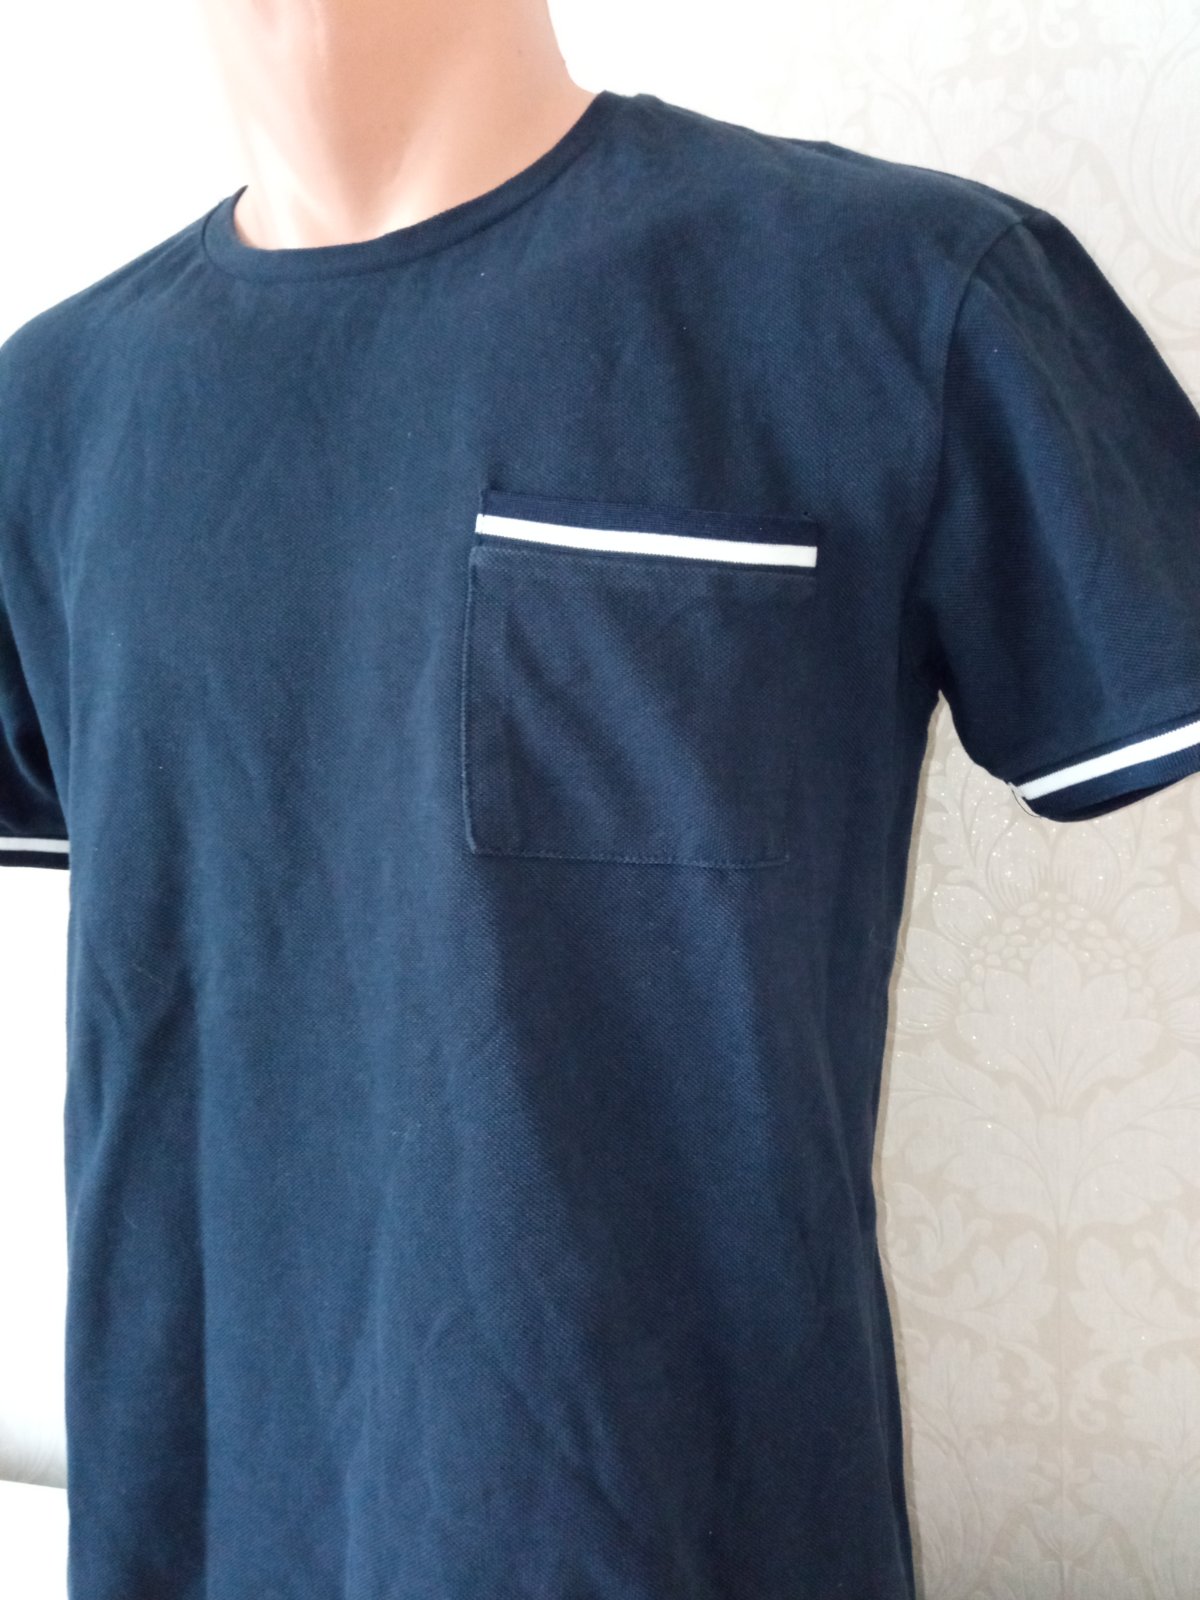 Tmavomodré tričko Zara (M)